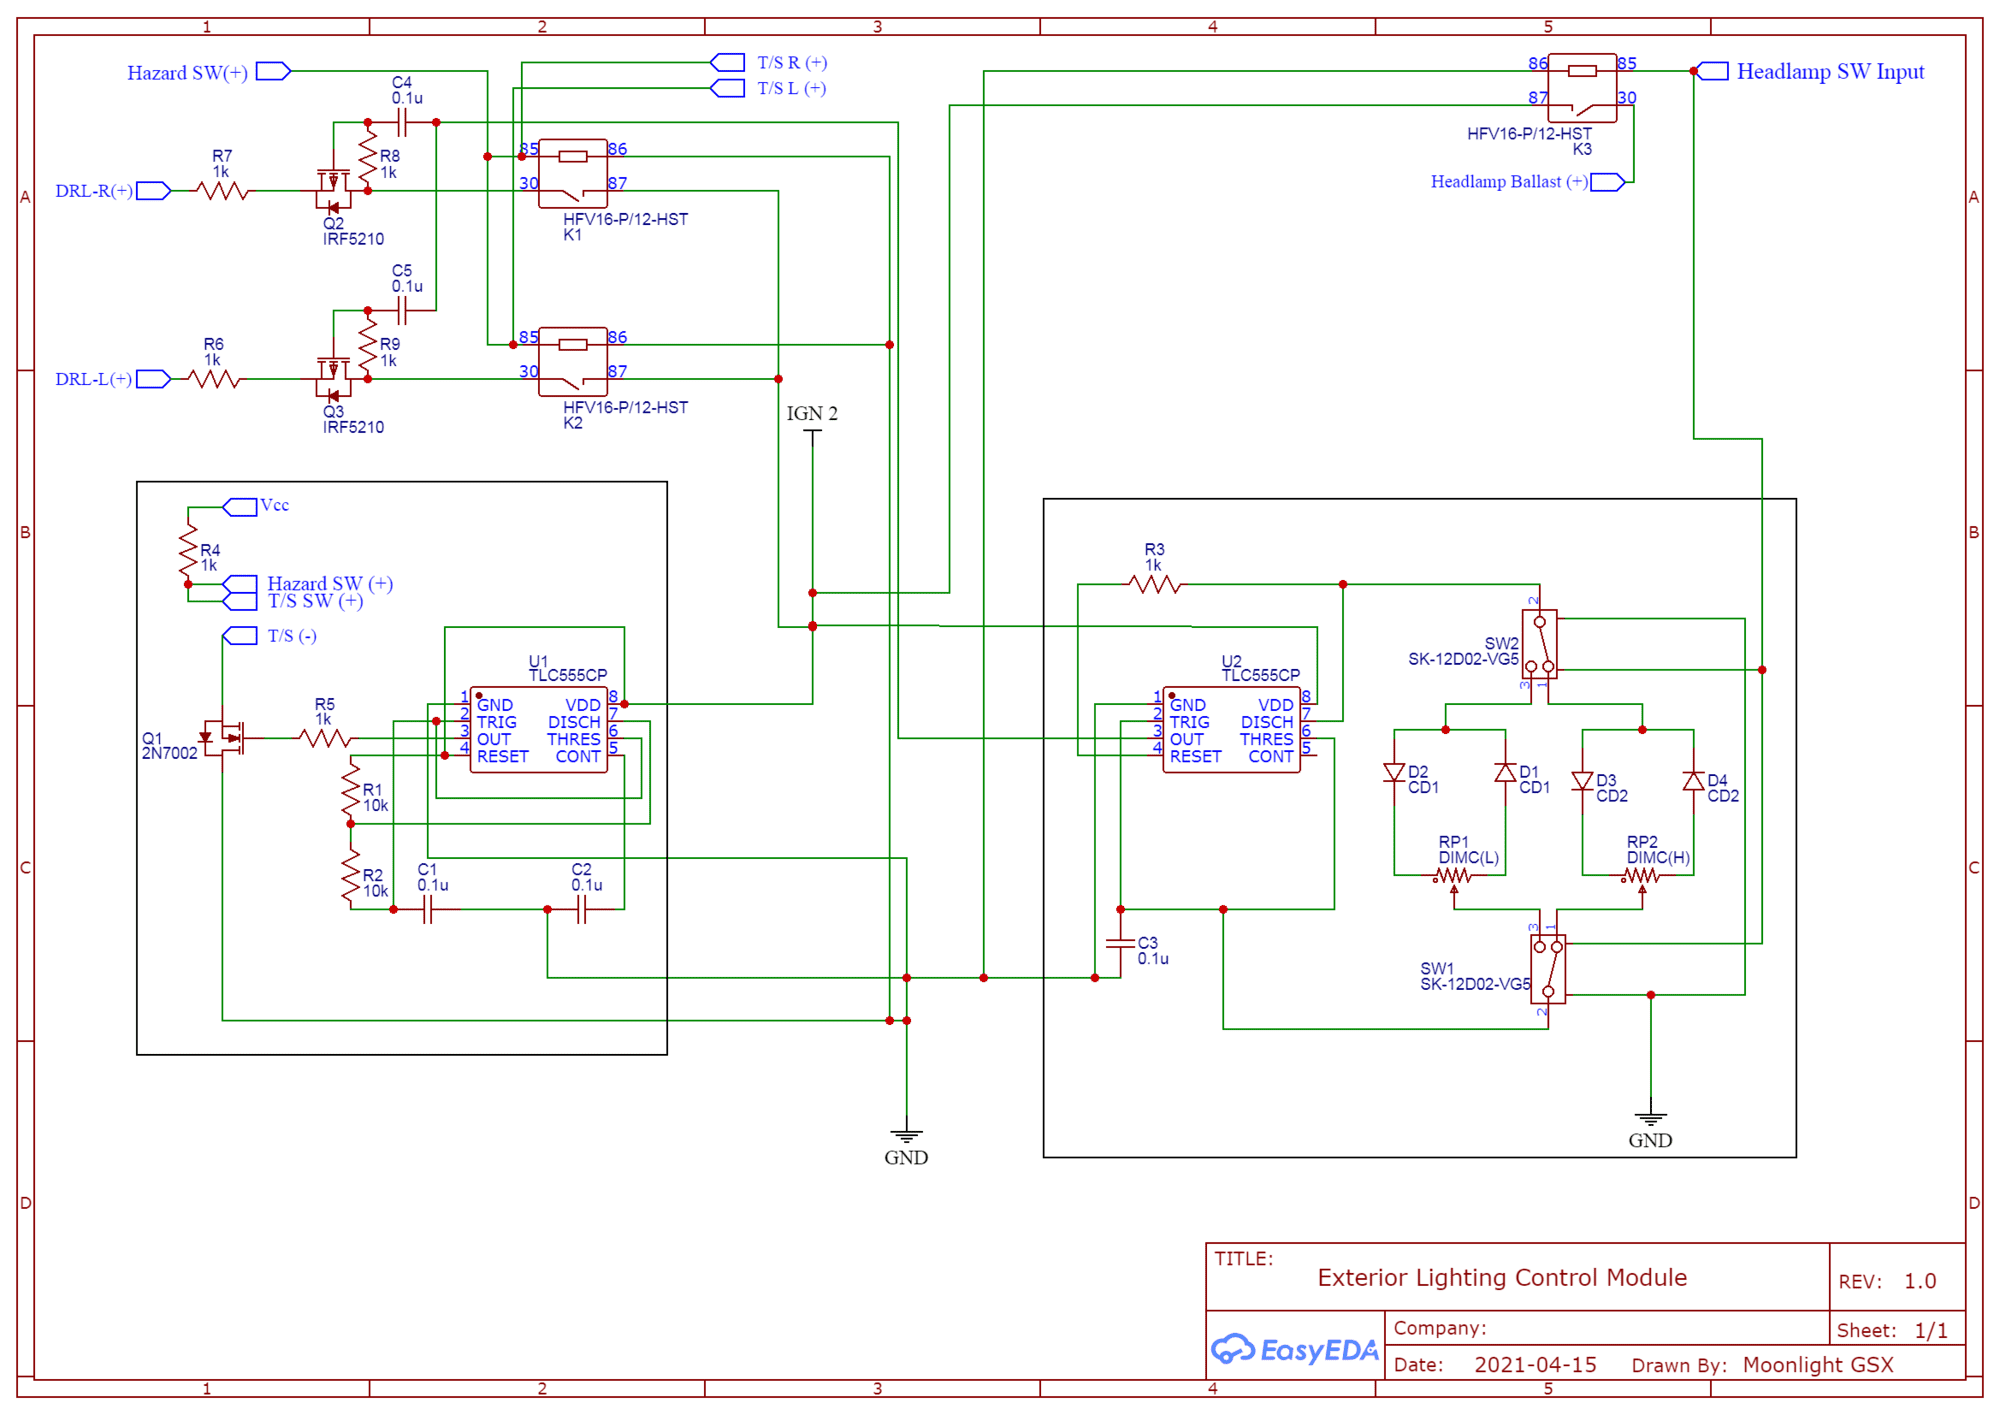 Schematic_Exterior Lighting Controller_2021-04-17 (1).png